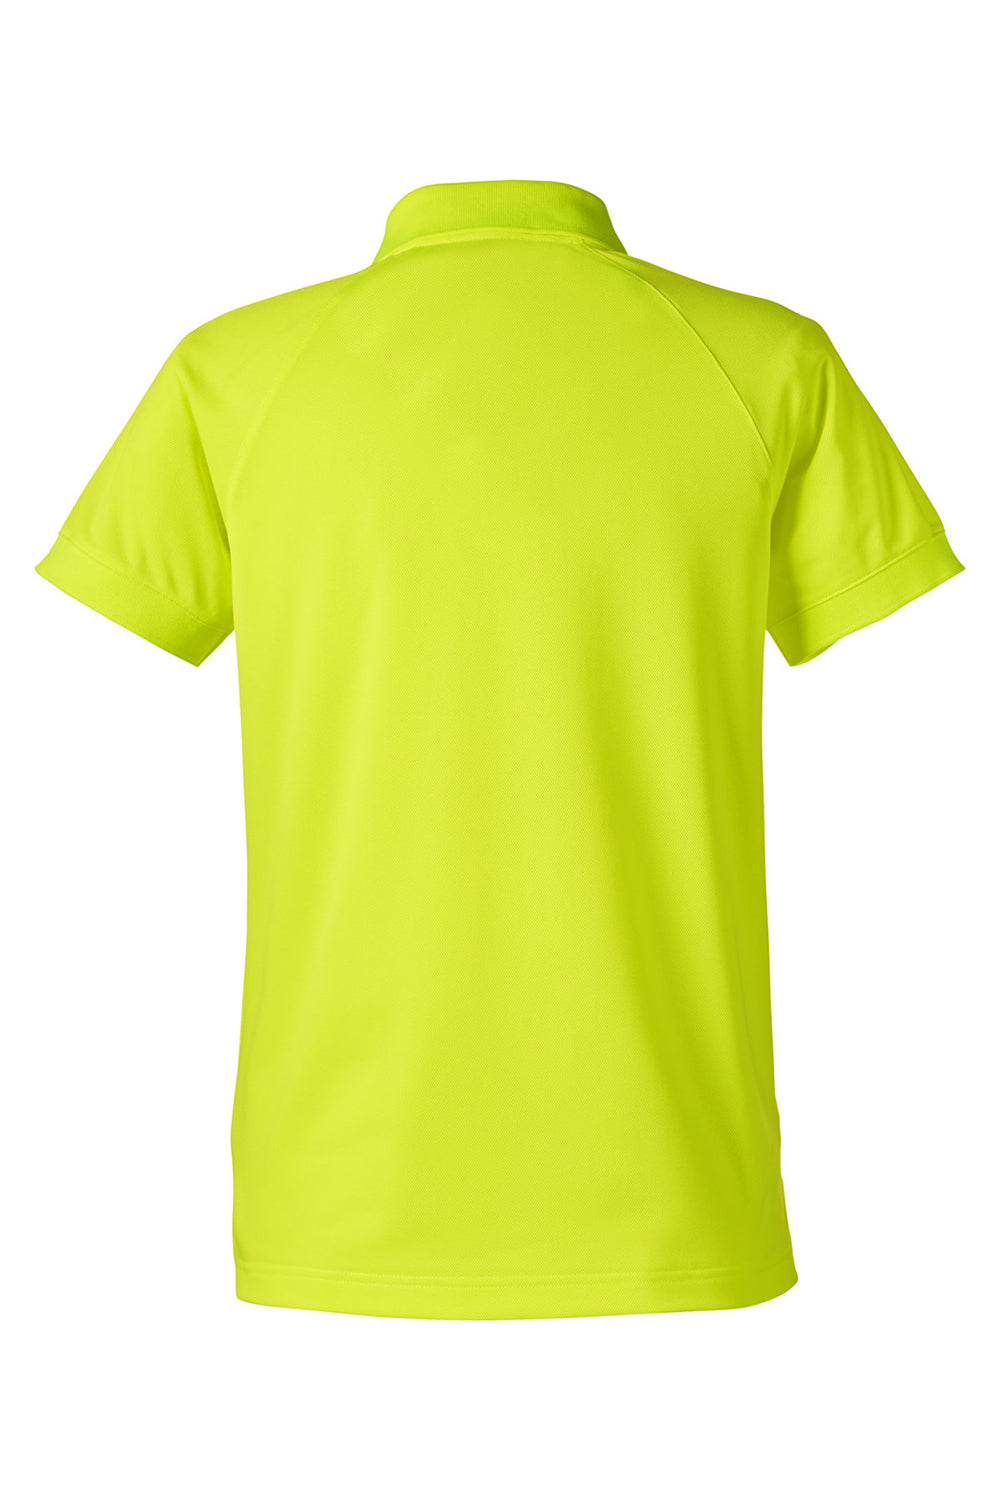 Harriton M208W Womens Charge Moisture Wicking Short Sleeve Polo Shirt Safety Yellow Flat Back